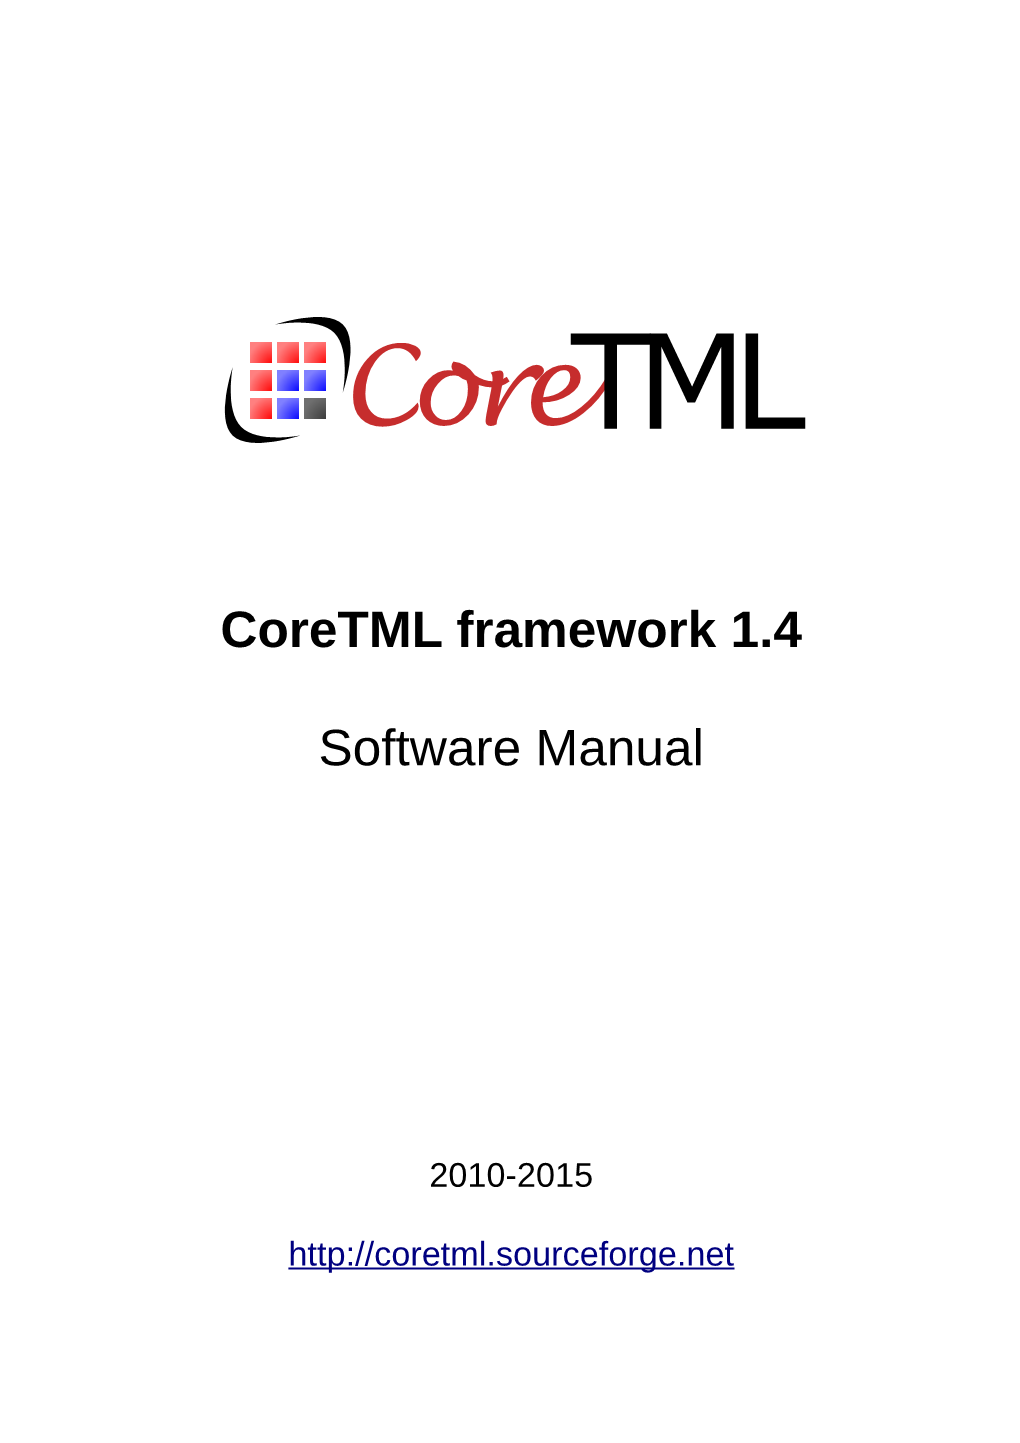 Coretml Framework 1.4 Software Manual